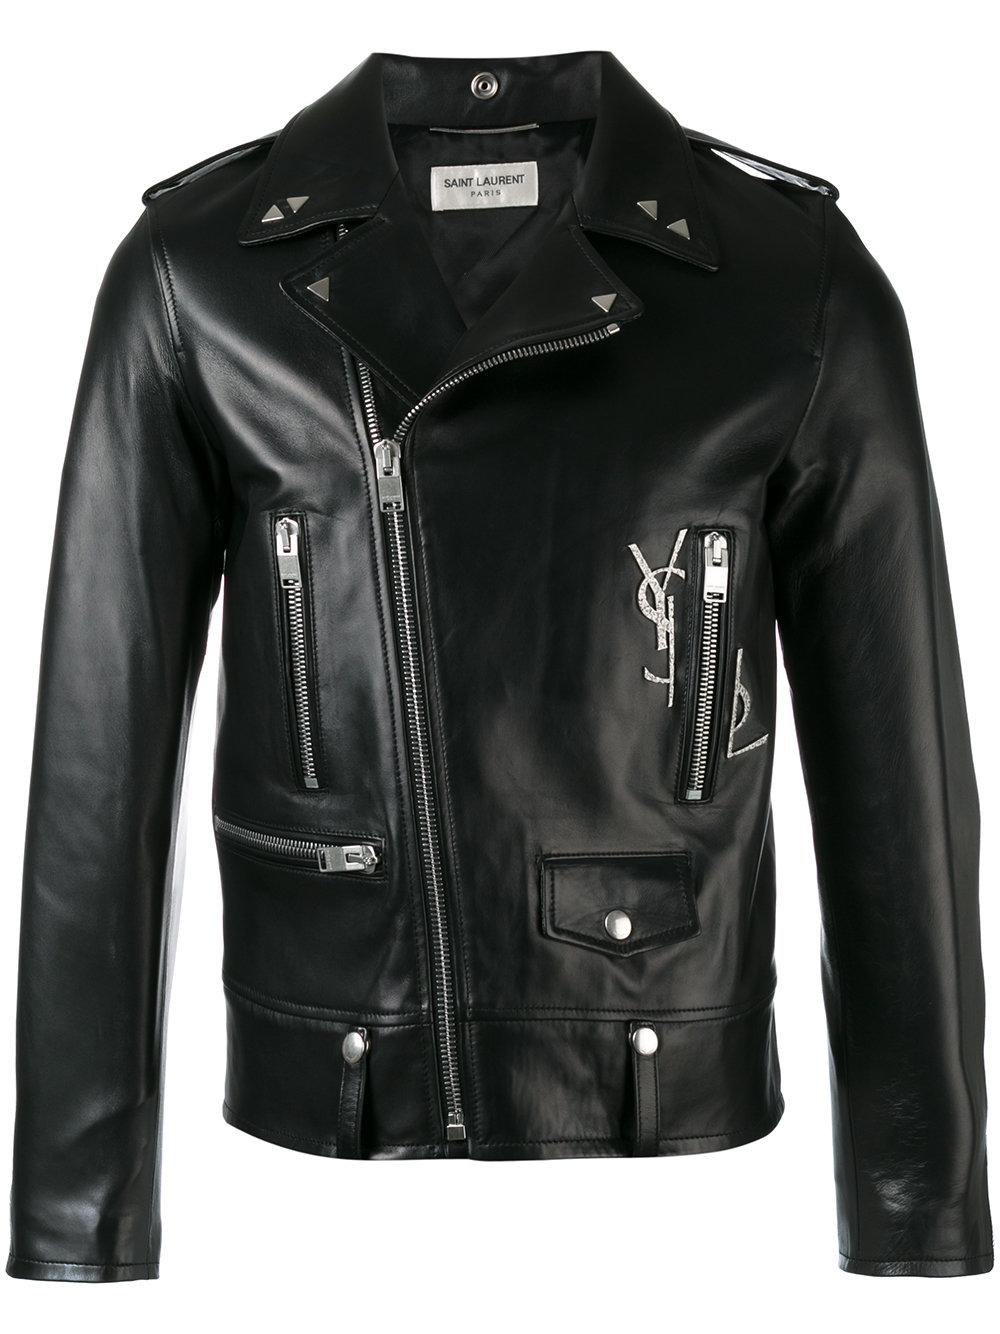 Lyst - Saint Laurent Classic Ysl Motorcycle Jacket in Black for Men